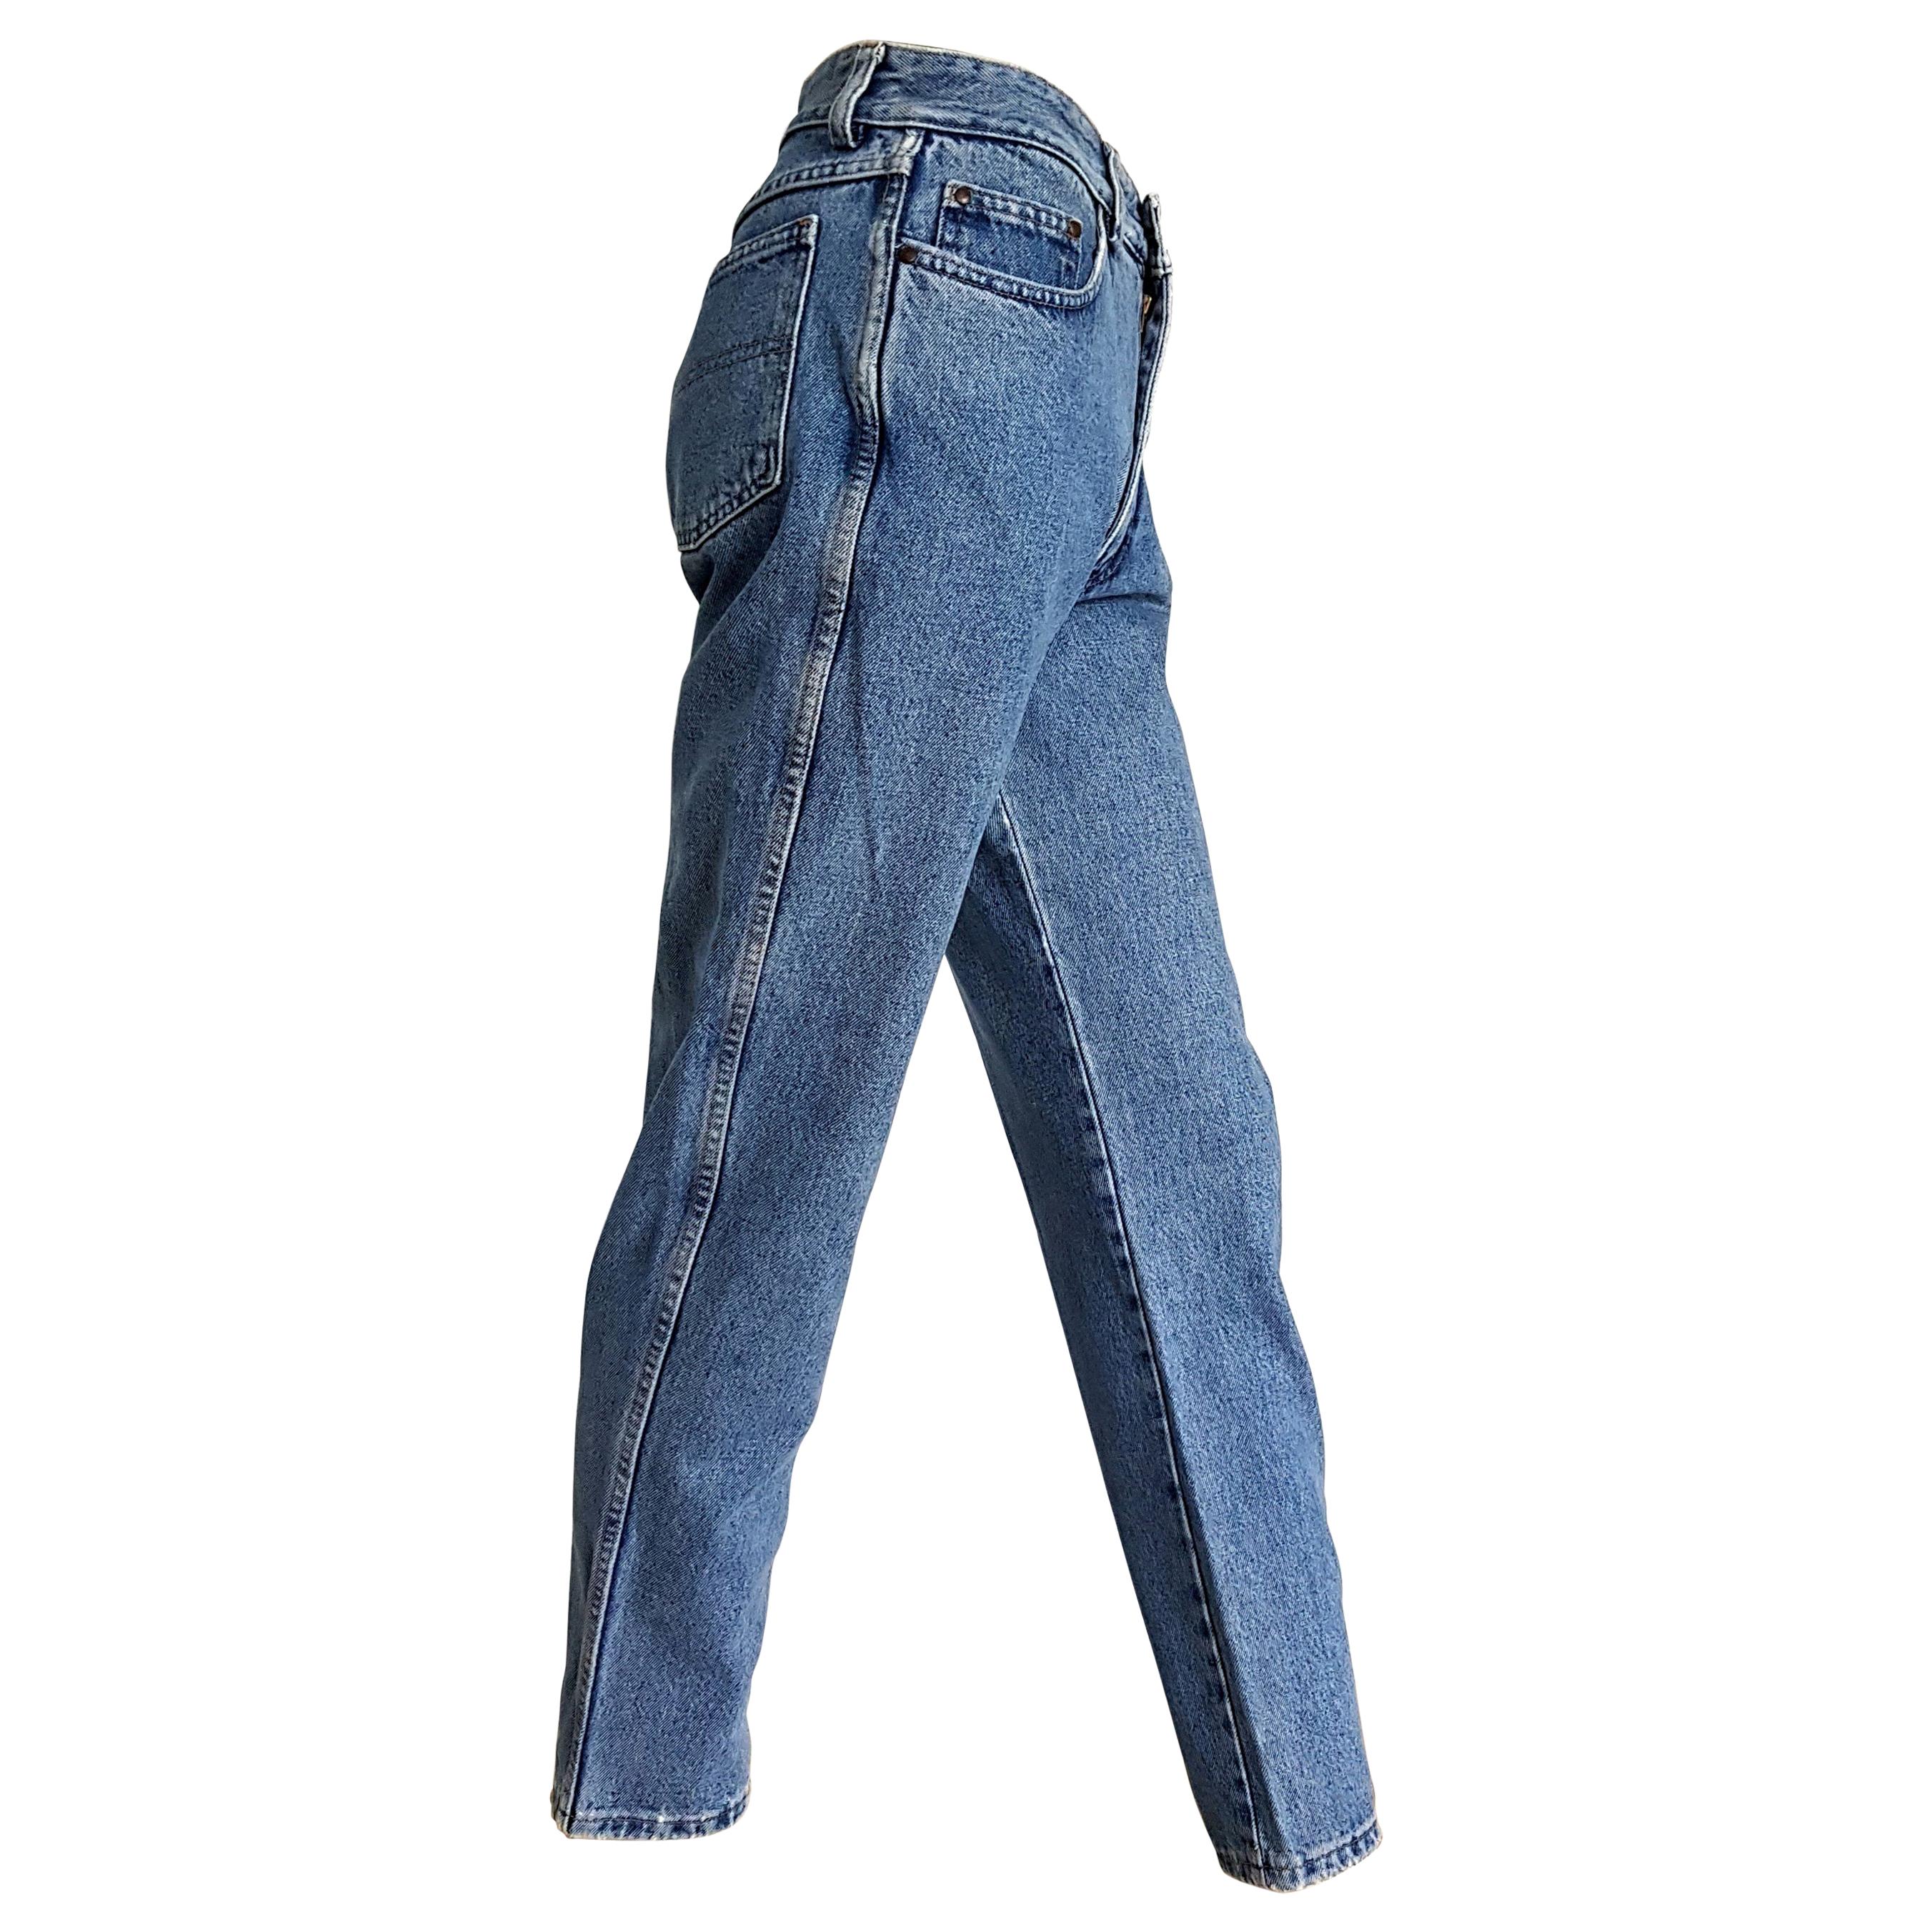 Katharine HAMNETT Jeans Size S / M - Unworn, New For Sale